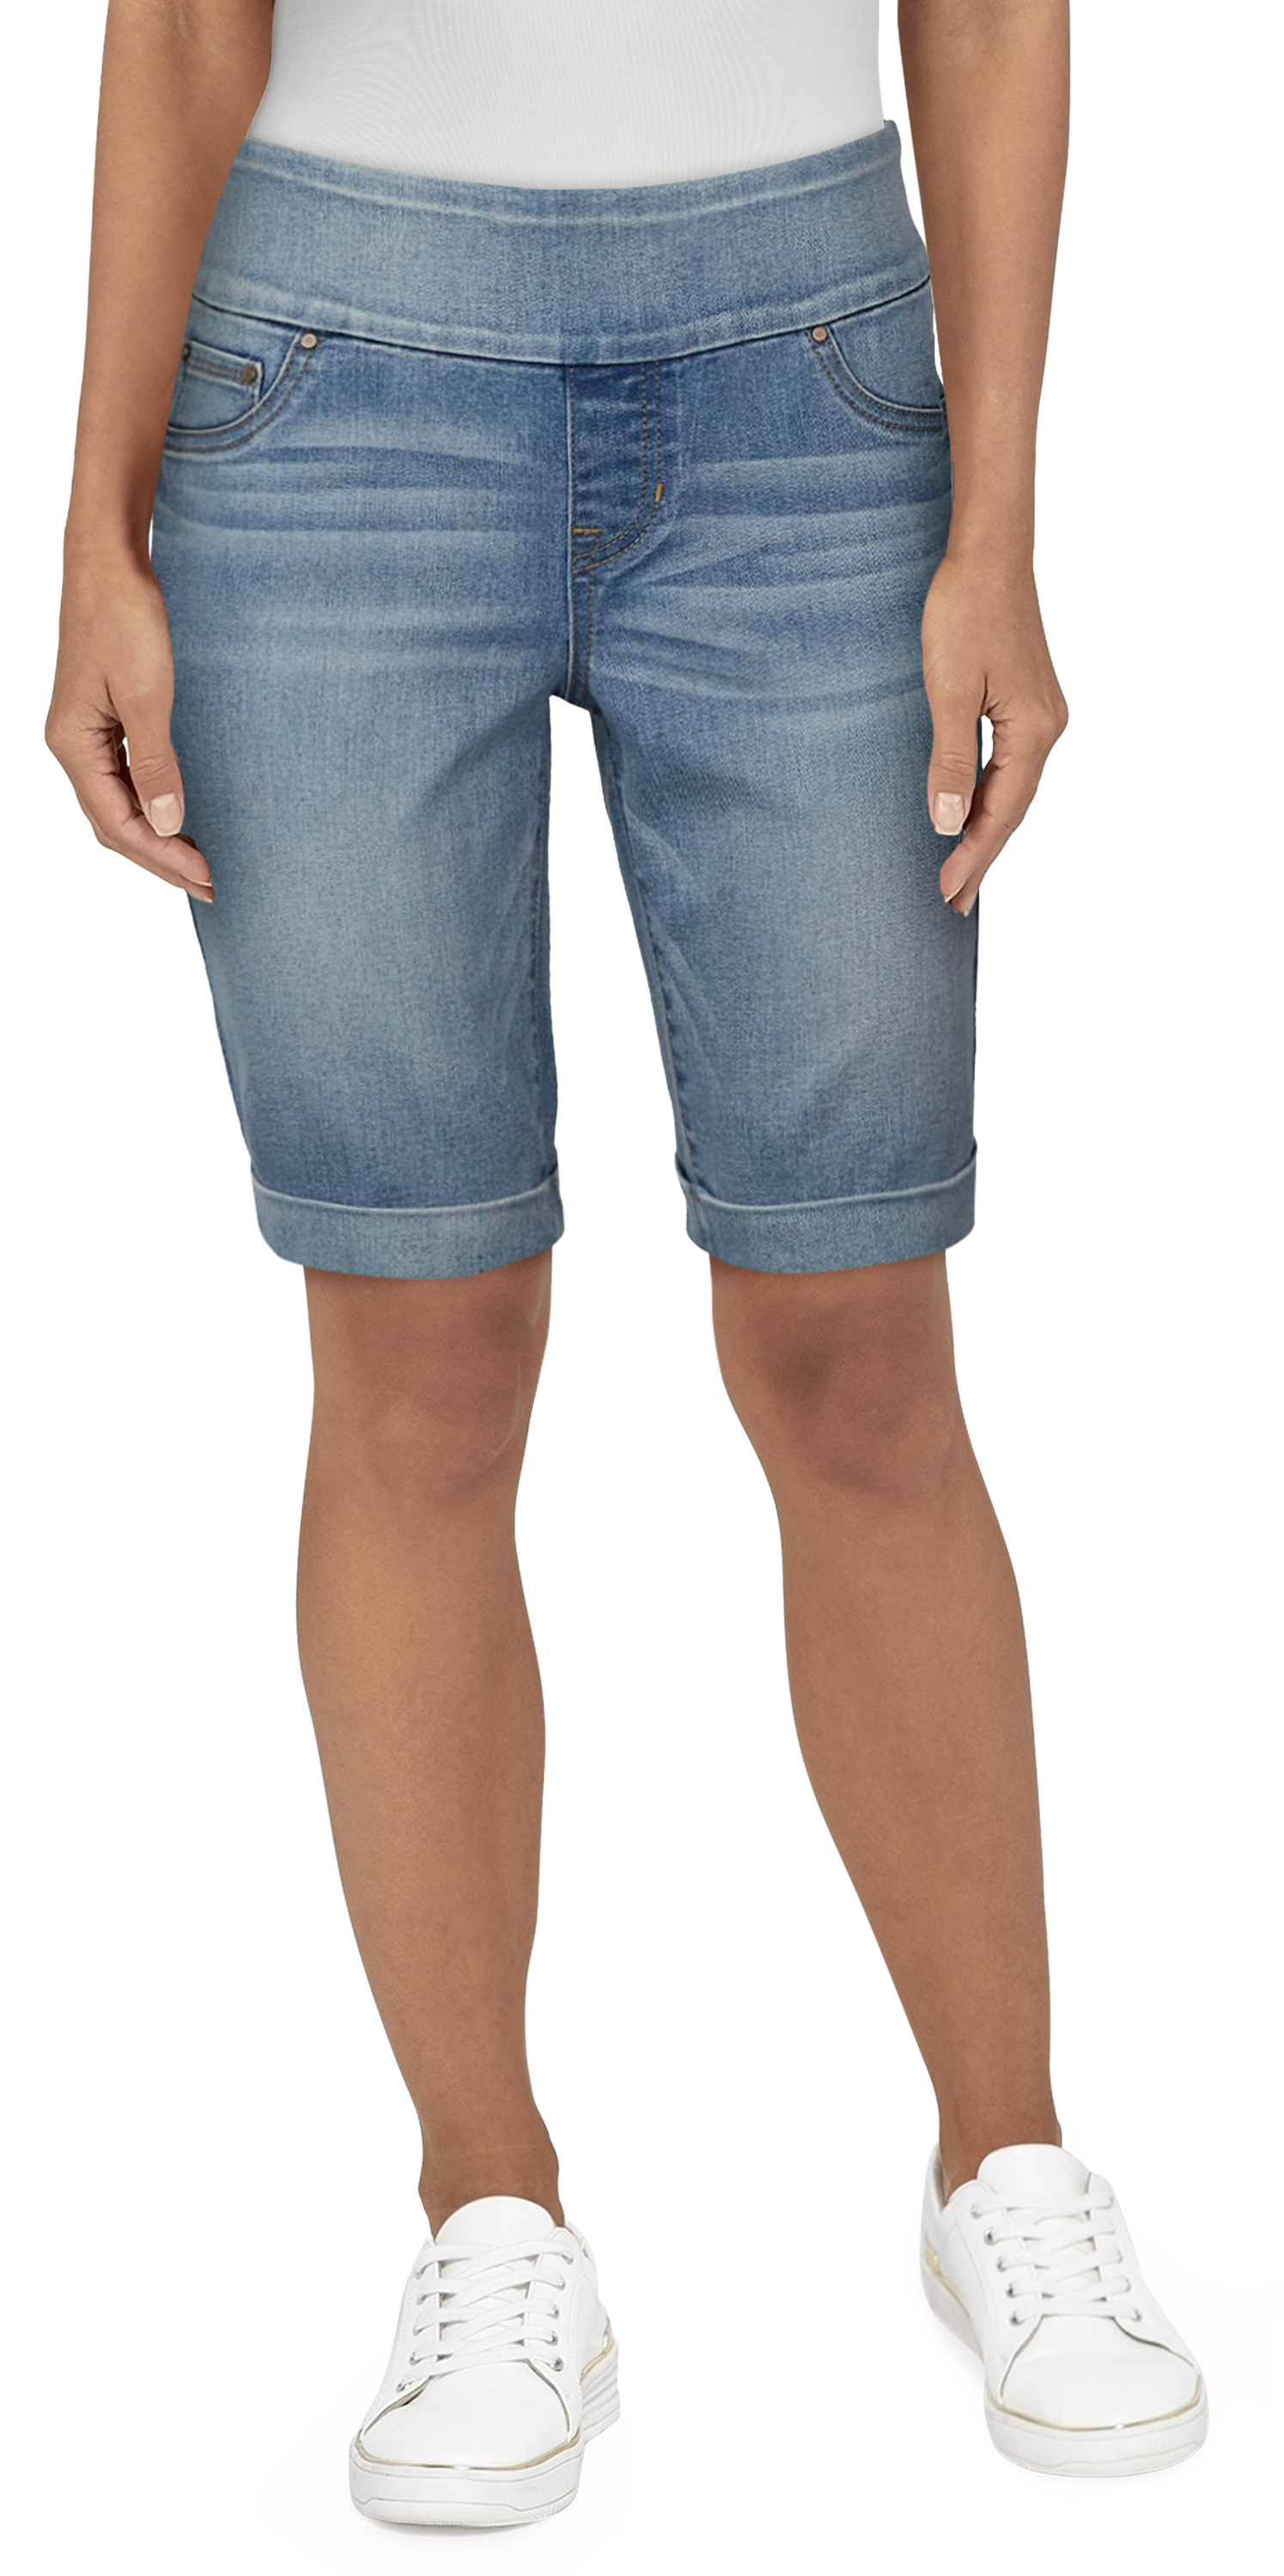 Natural Reflections Comfort Waist Bermuda Shorts for Ladies - Light Wash - 18